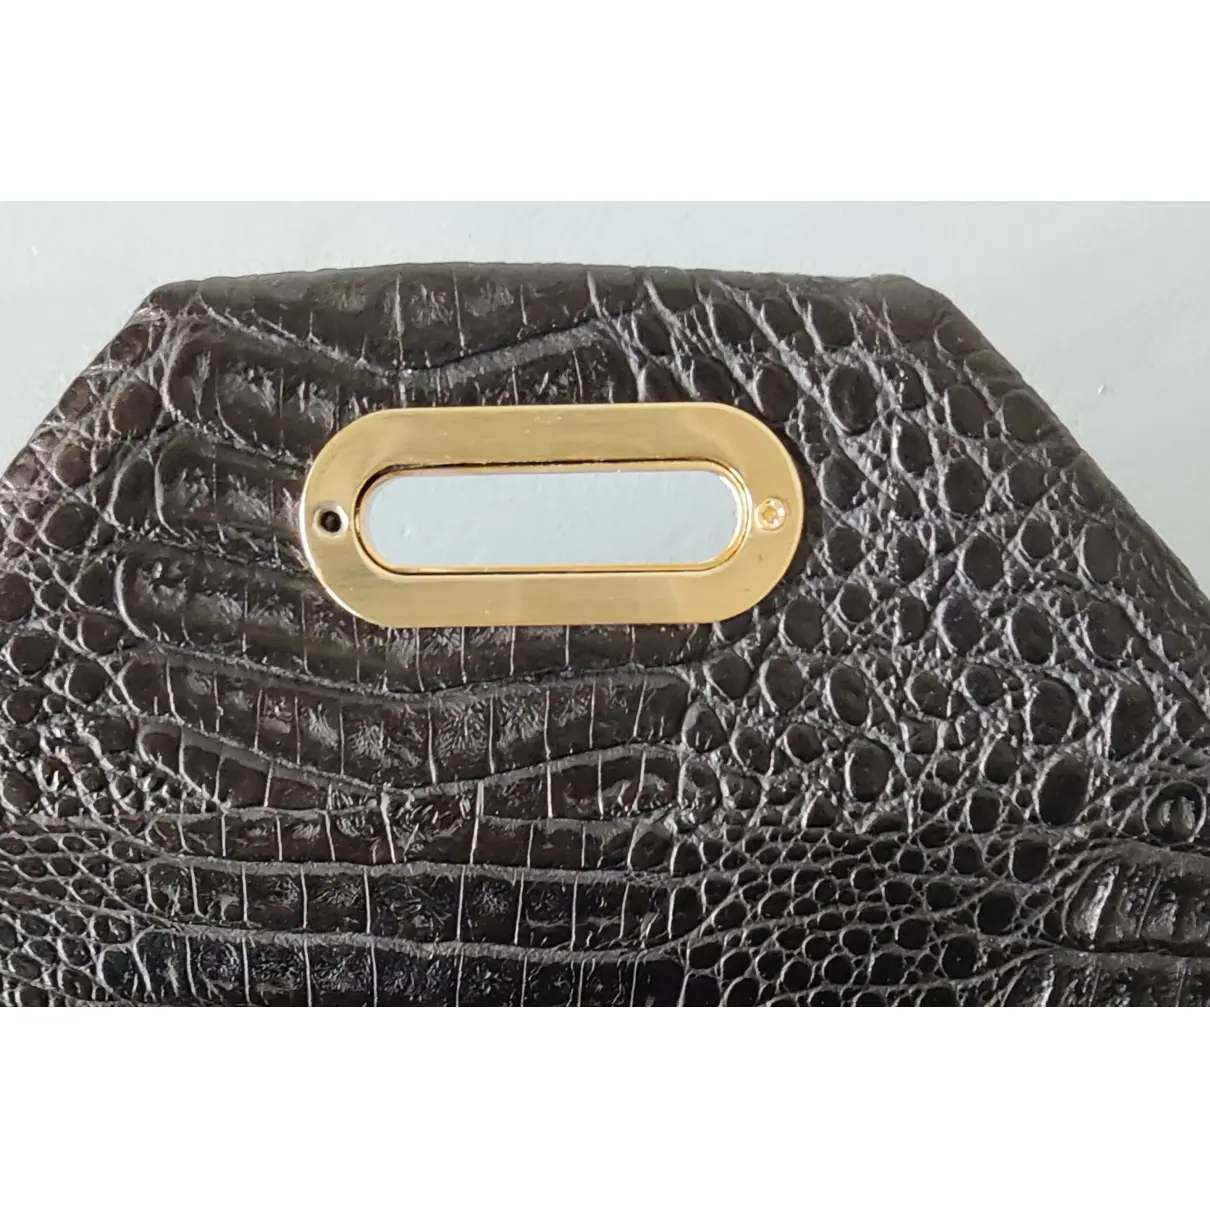 Buy Jimmy Choo Rosetta vegan leather clutch bag online